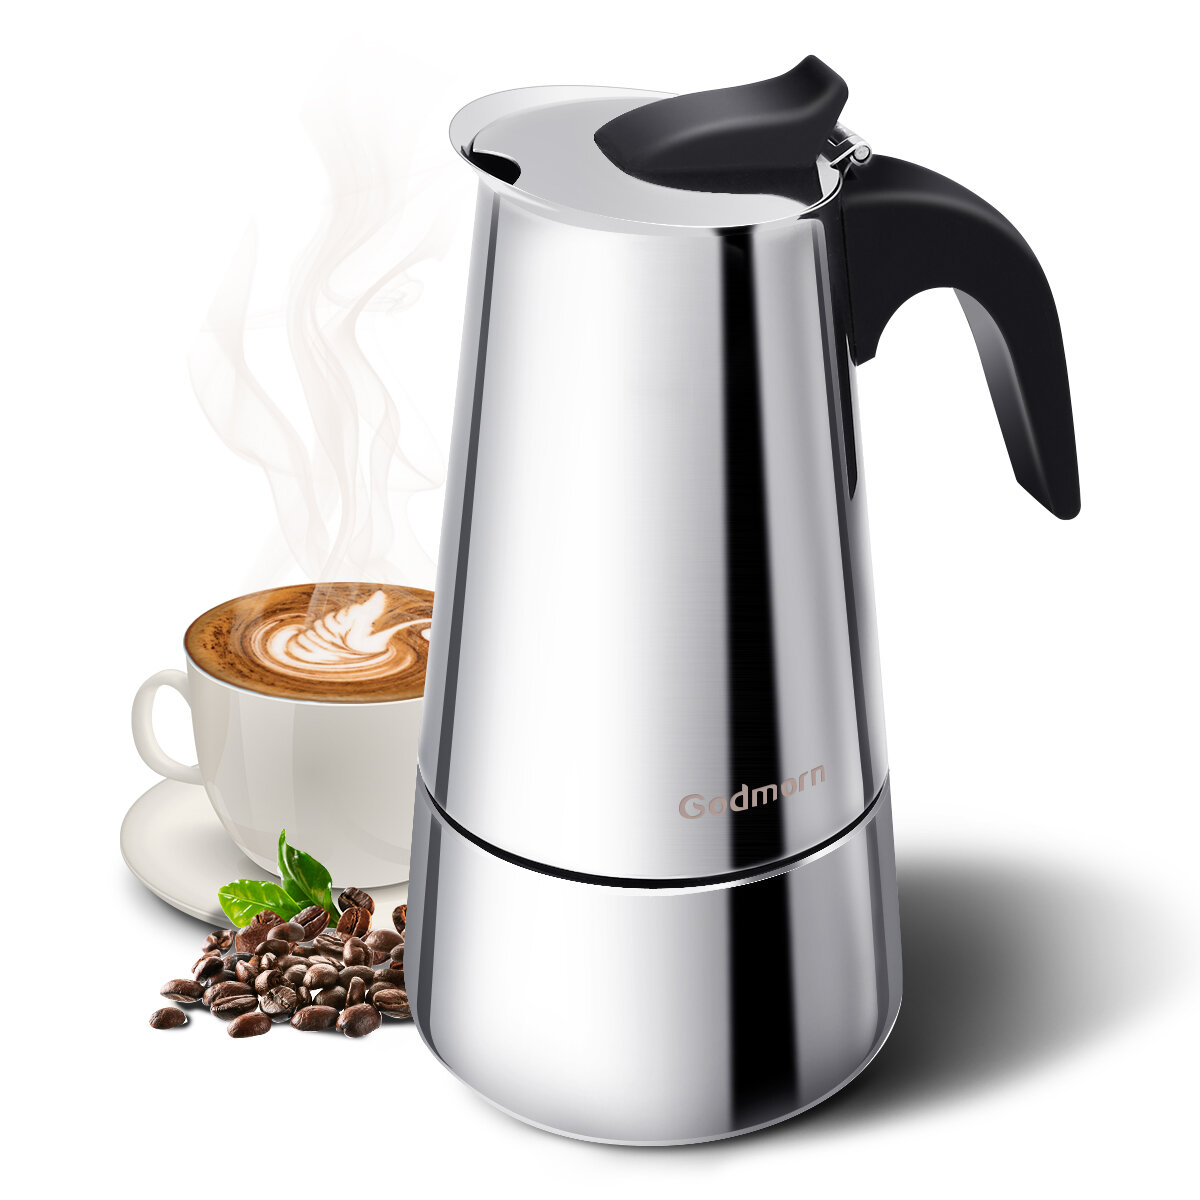 Godmorn Stovetop Espresso Maker Moka Pot Percolator Italian Coffee Maker 300ml/10oz/6 Cup Classic Ca